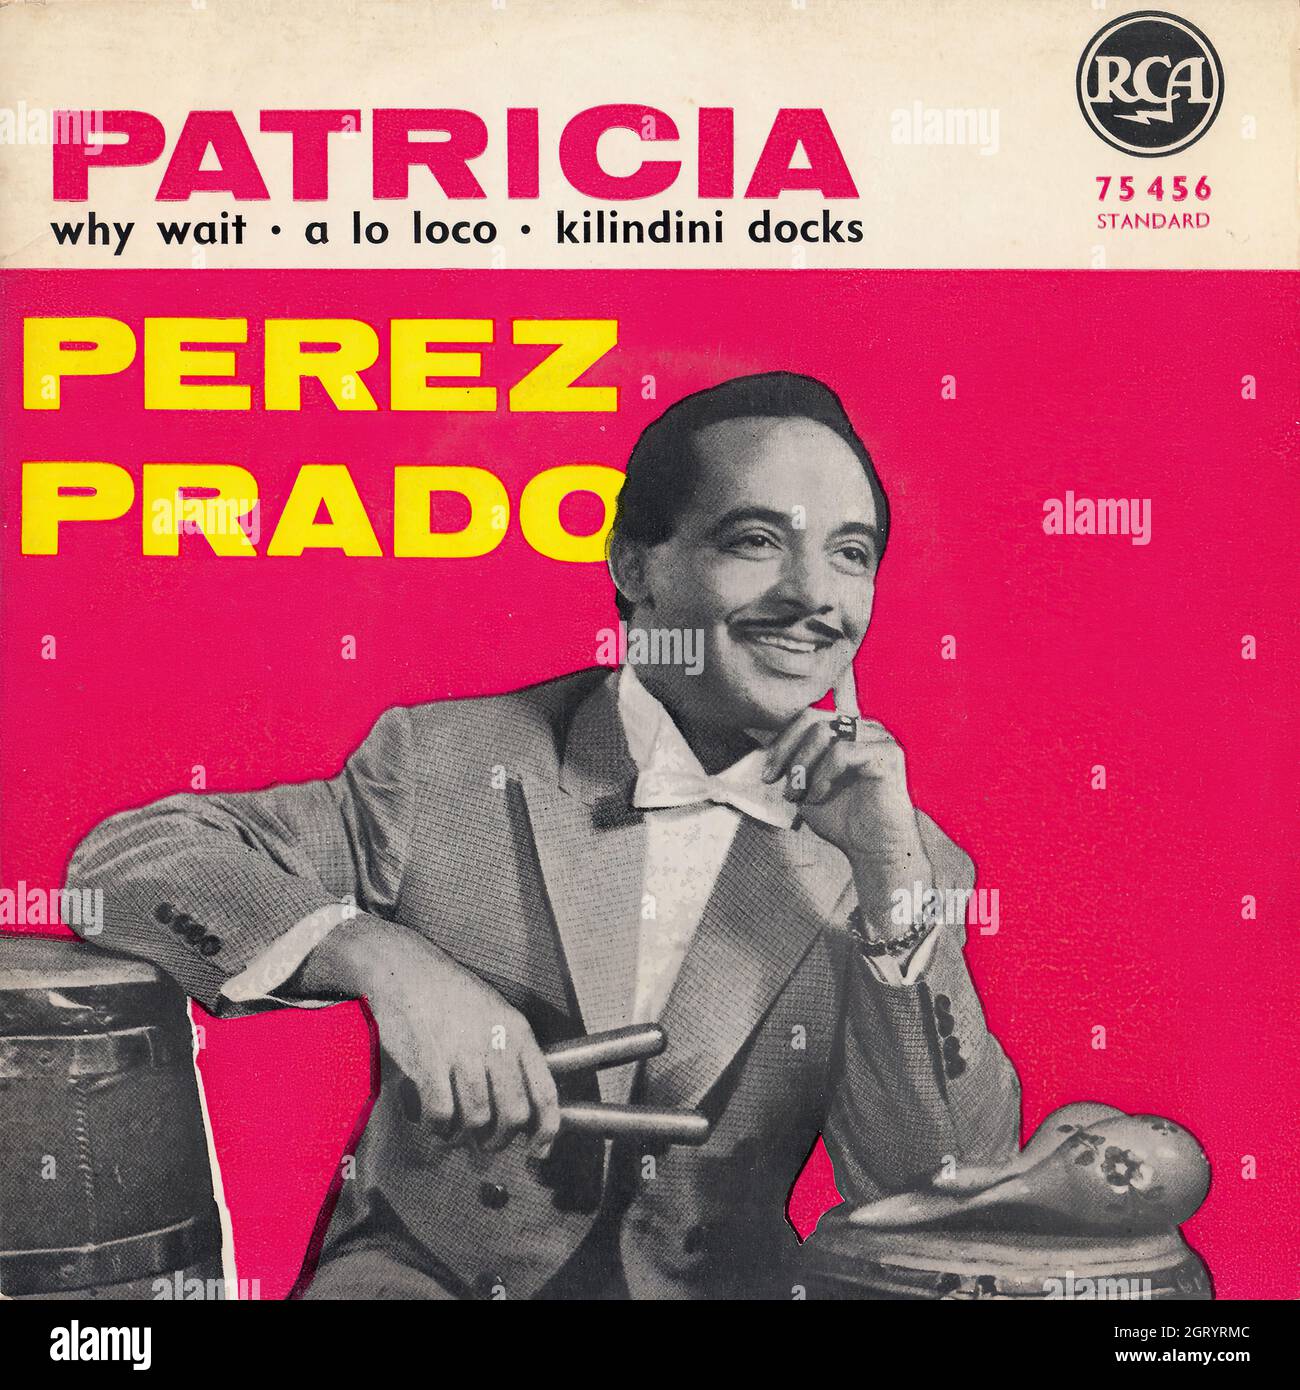 Perez Prado - Patricia EP - Vintage Vinyl Record Cover Stock Photo - Alamy